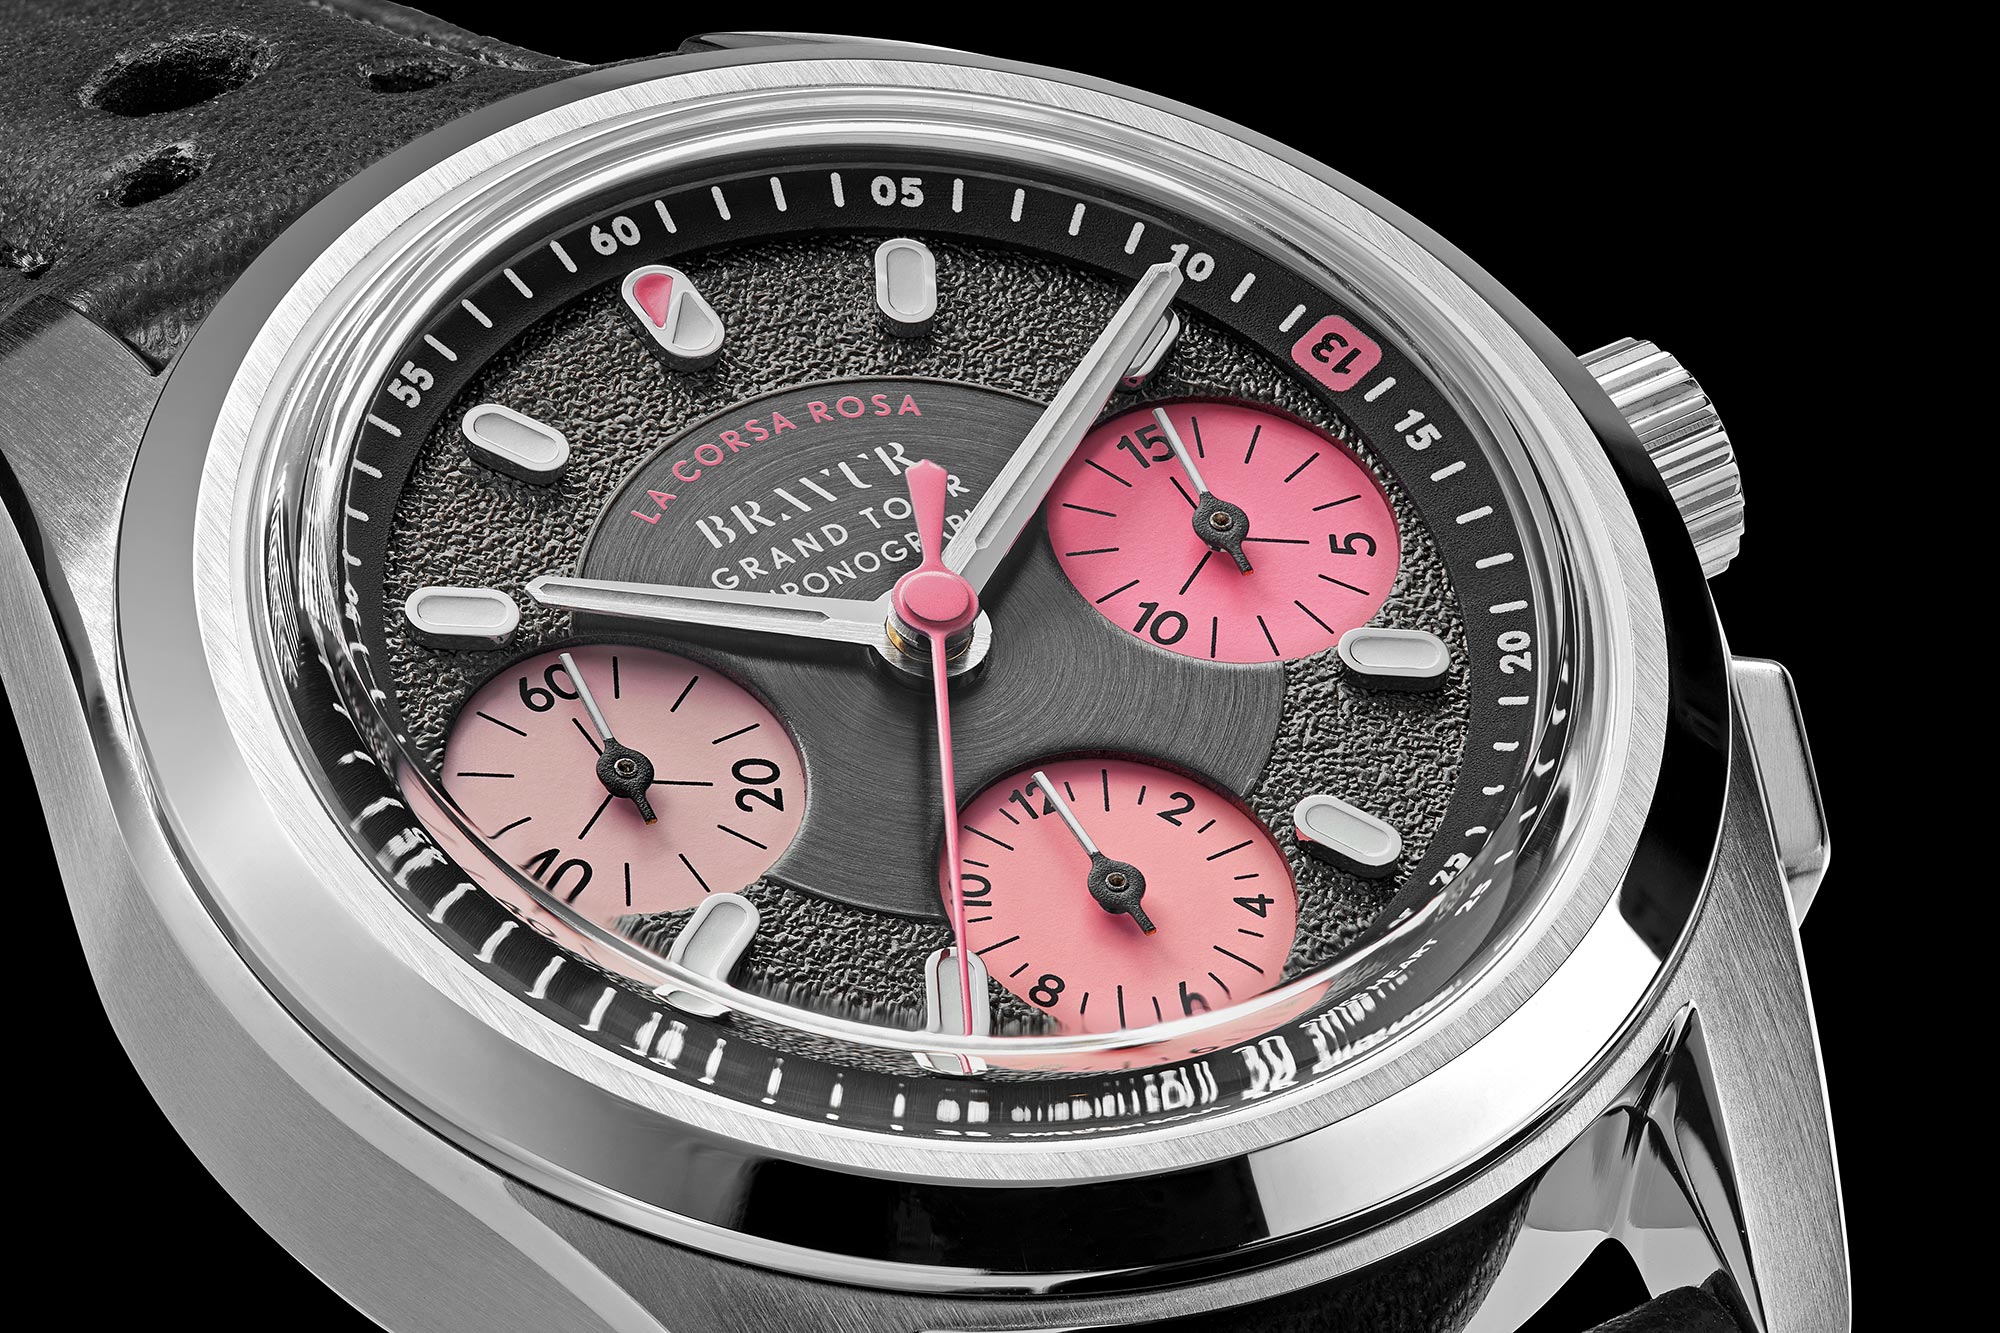 Bravur La Corsa Rosa IV luxury handmade mechanical chronograph watch celebrates Giro d'Italia, up close